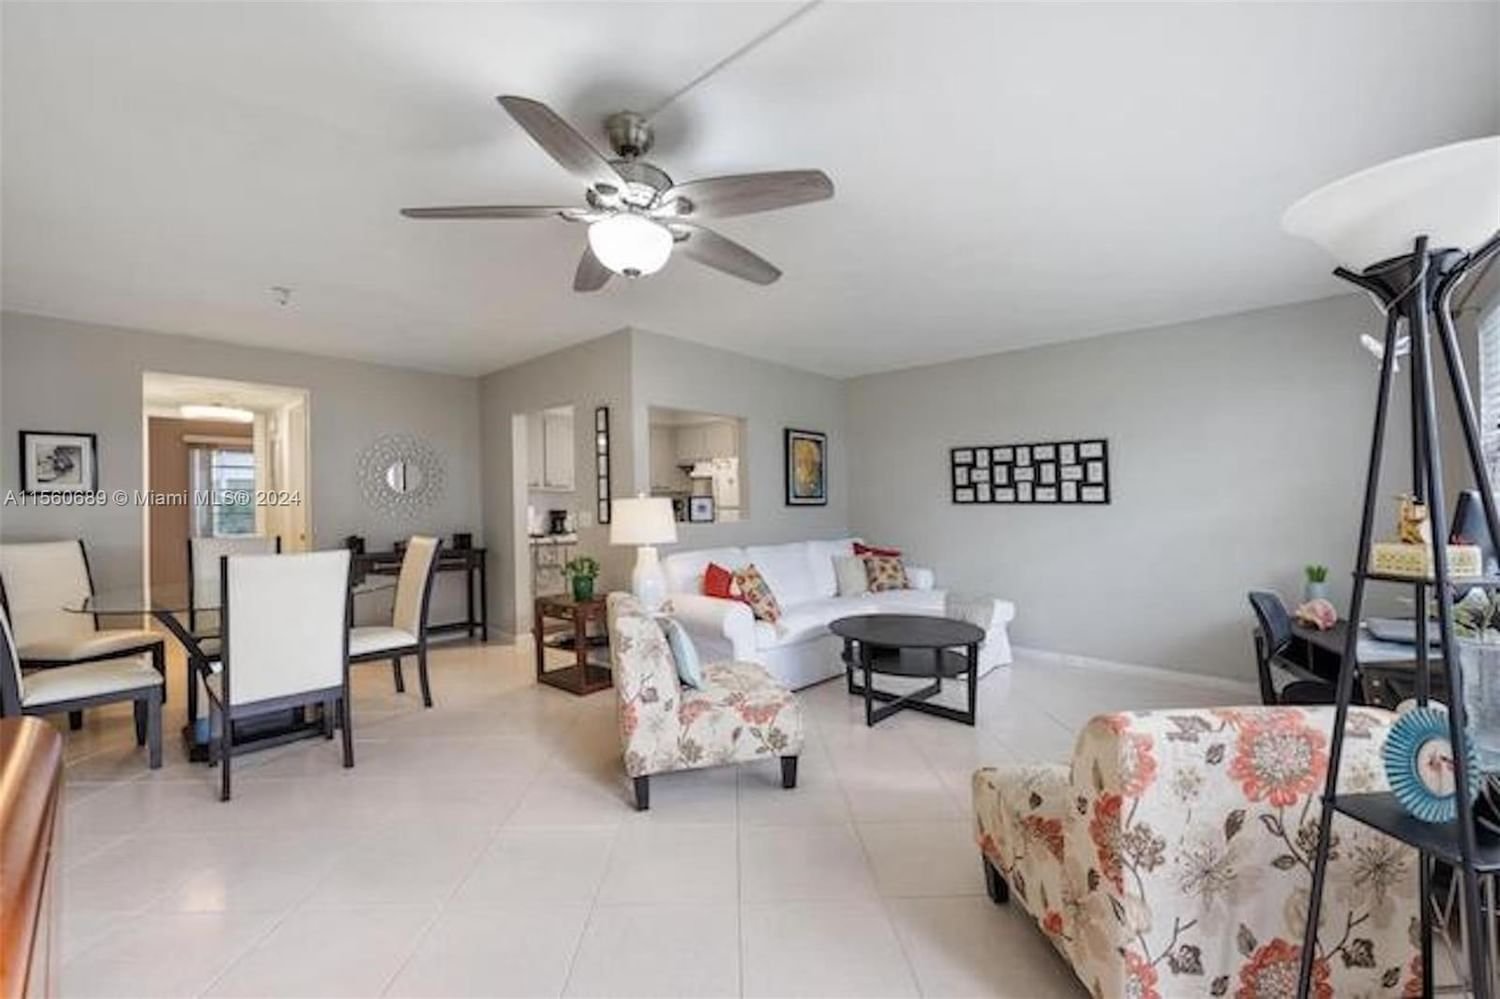 Real estate property located at 194 Newport L, Broward County, NEWPORT L CONDO, Deerfield Beach, FL